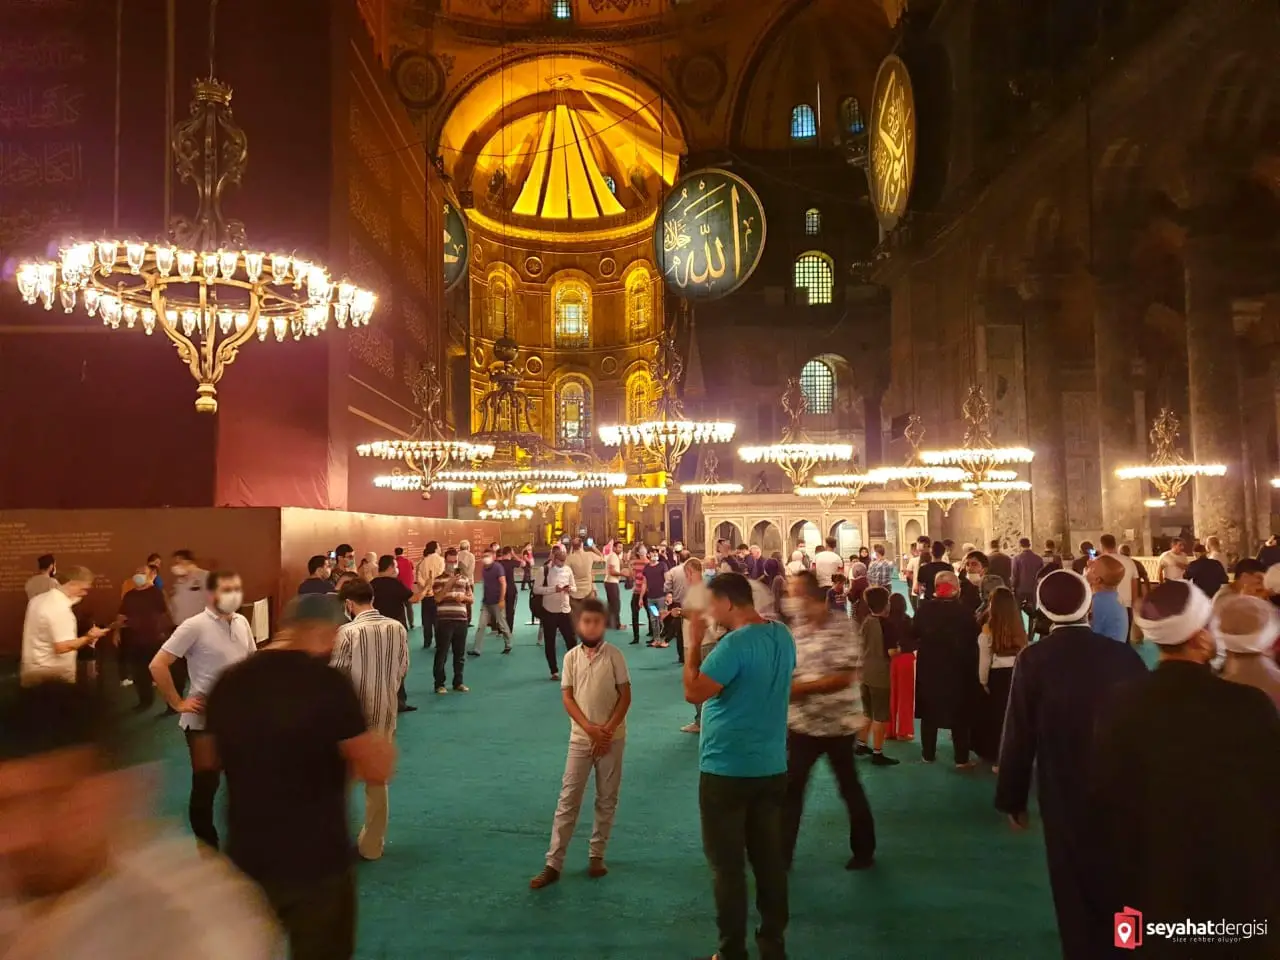 Inside the Hagia Sophia Mosque